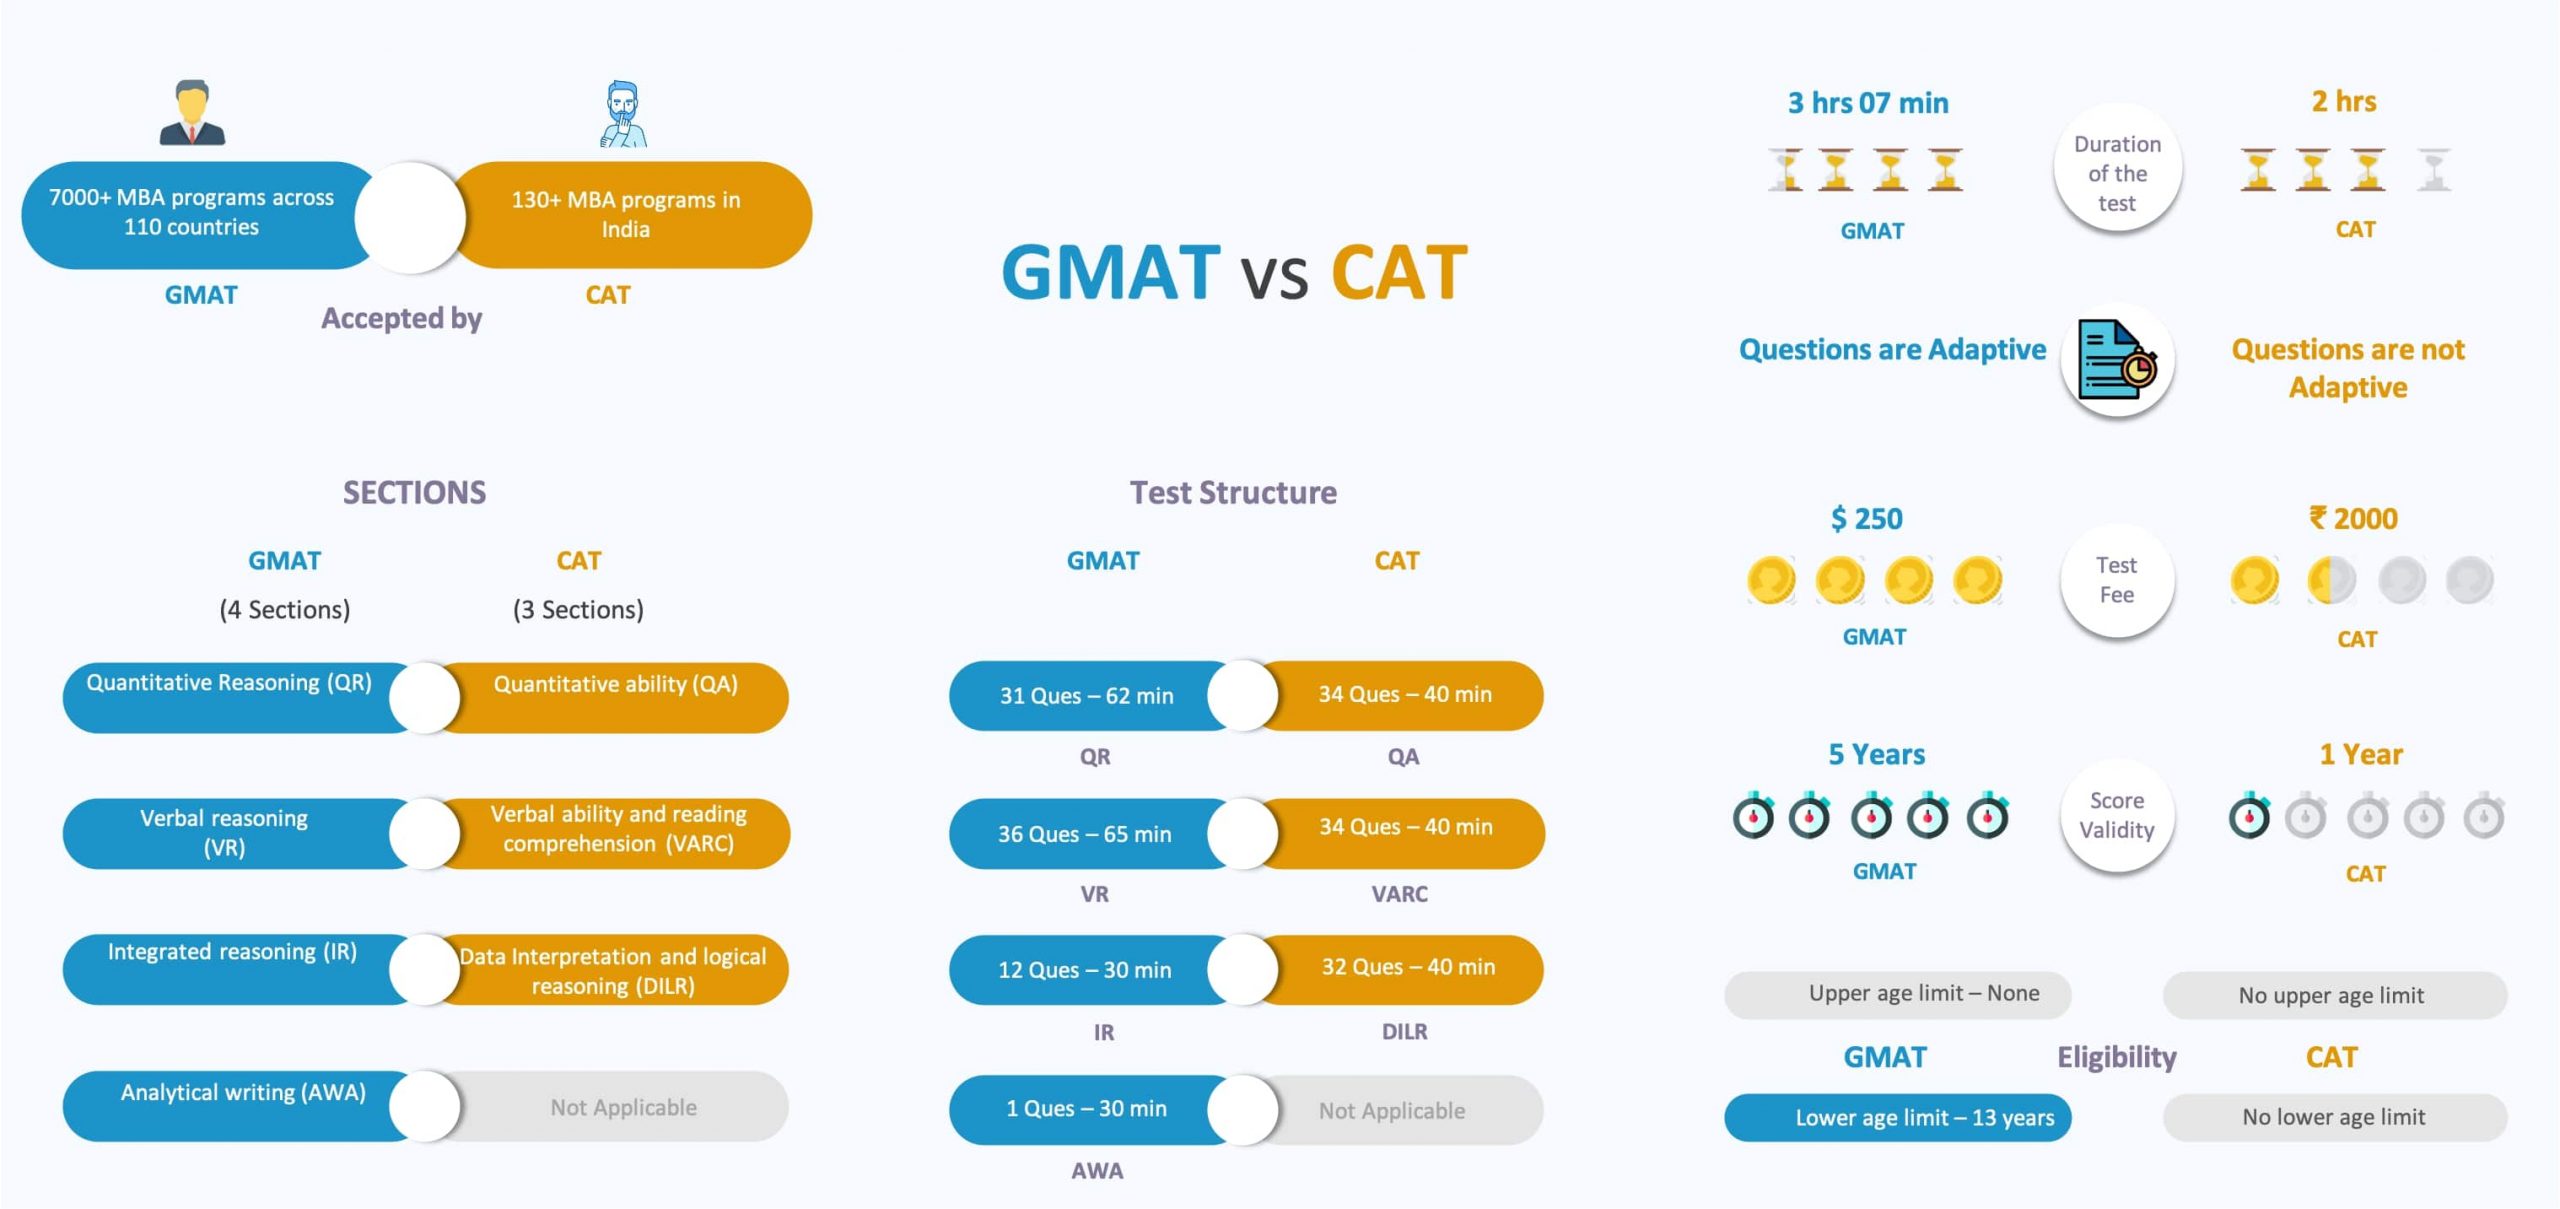 GMAT vs. CAT - Key differences